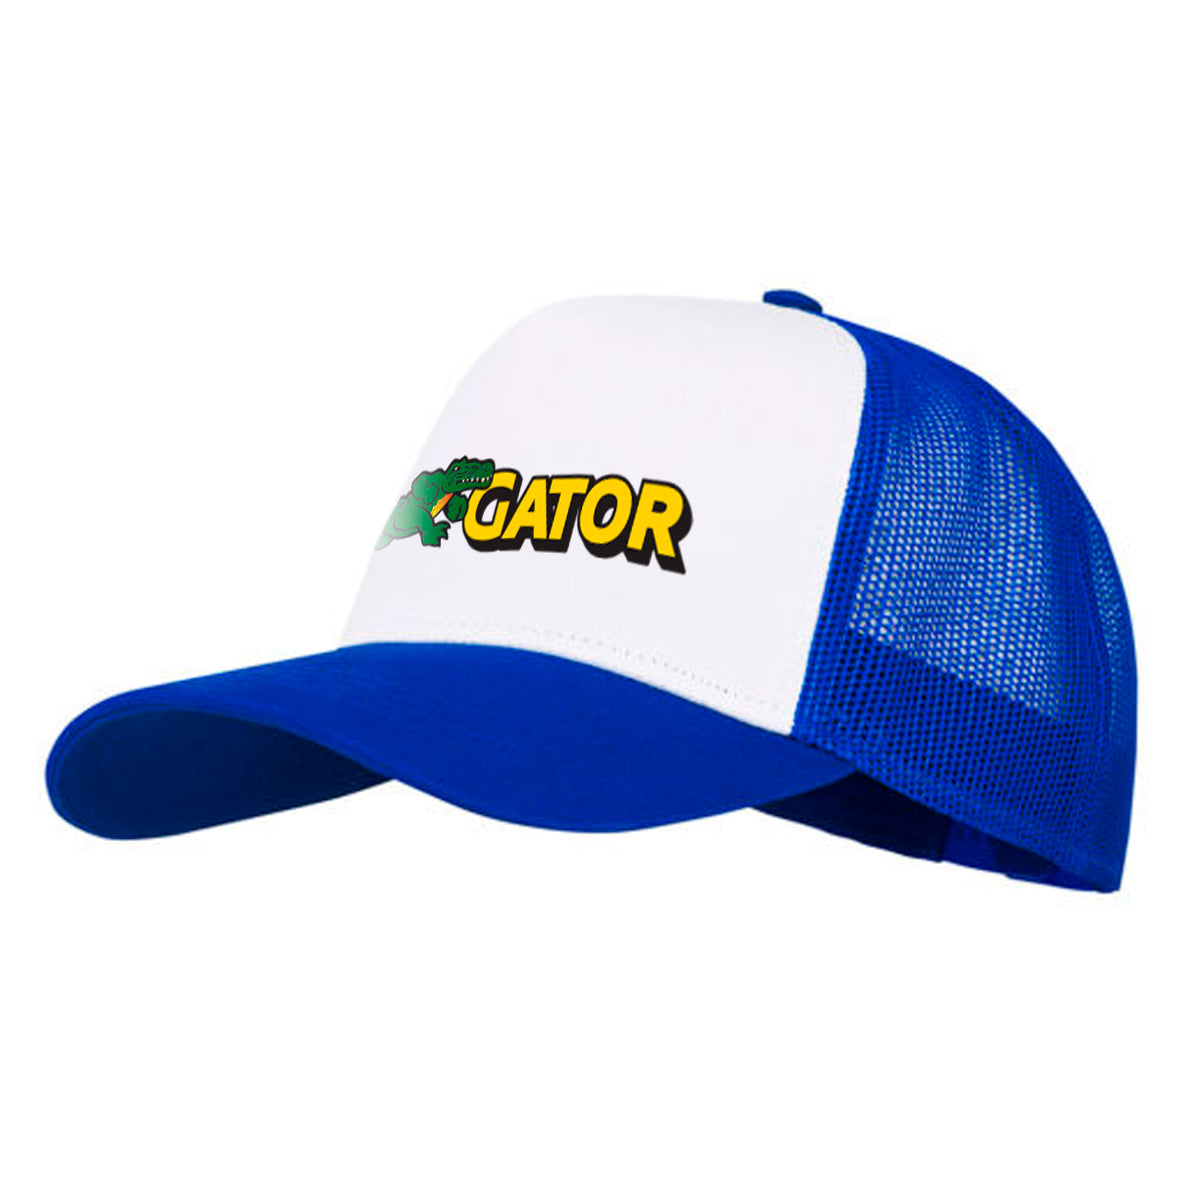 John Deere Gator Trucker Caps